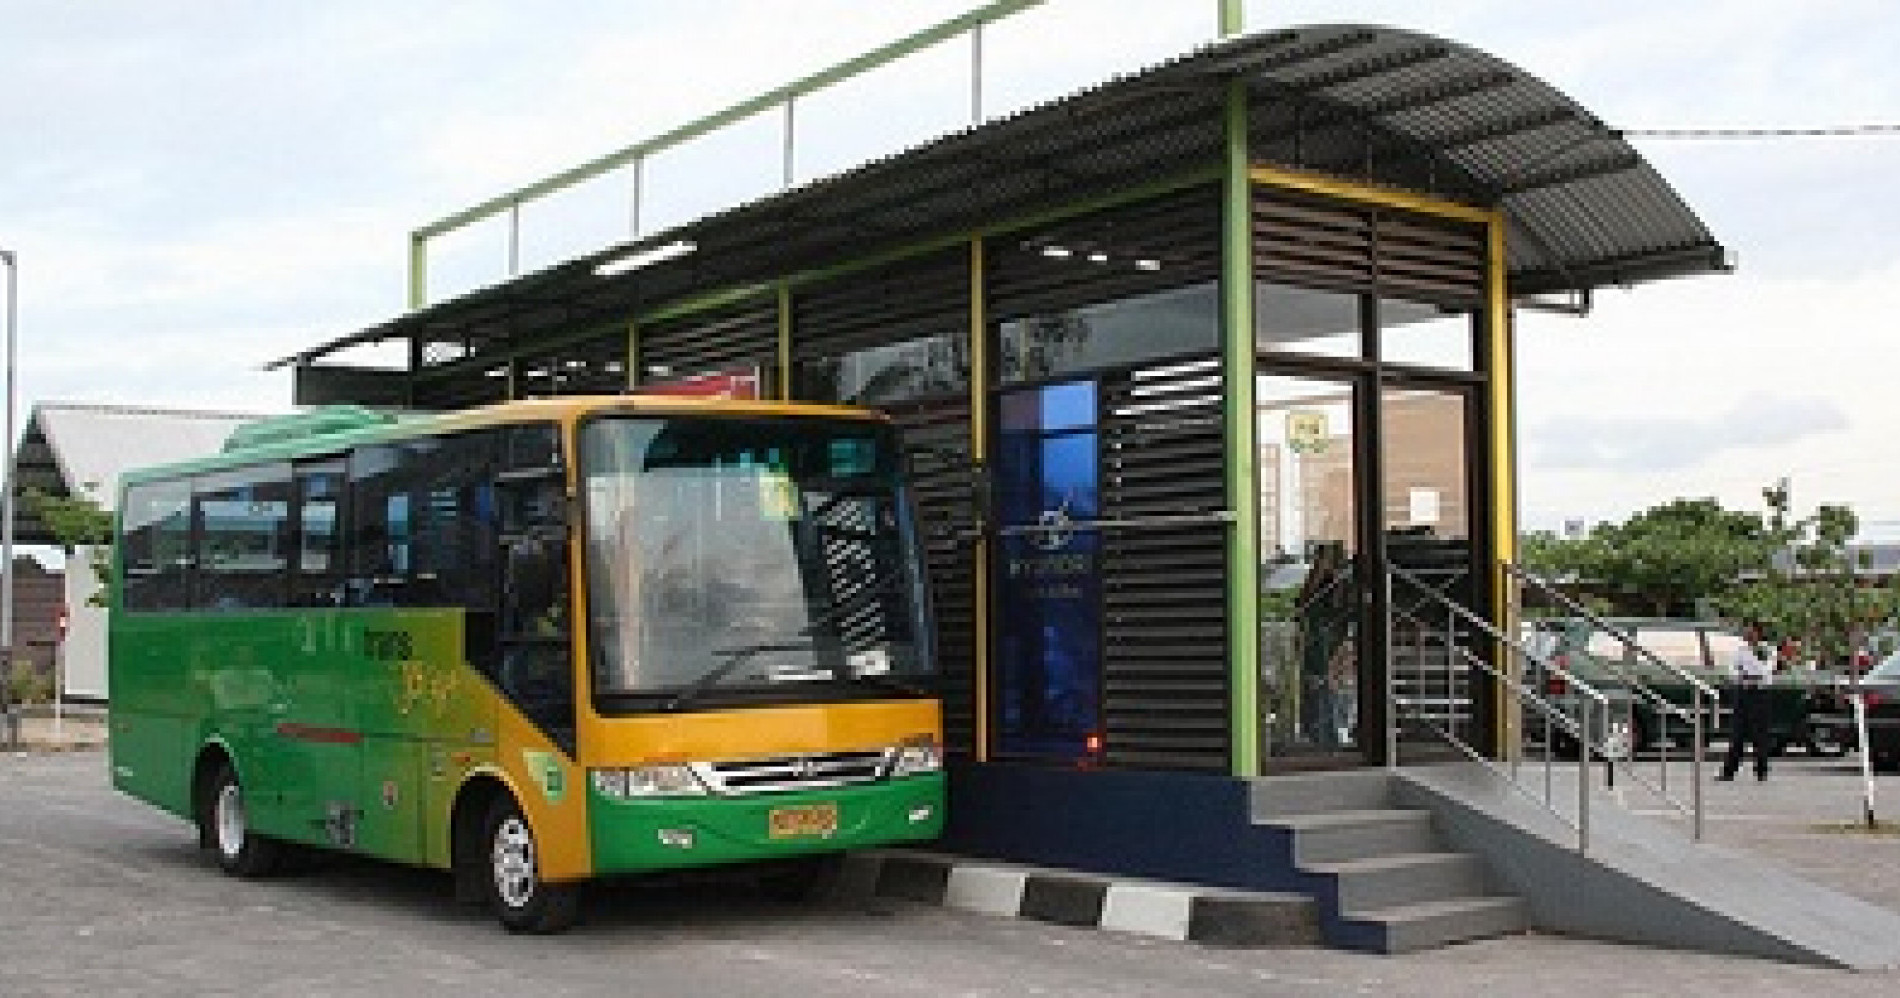 Trans Jogja, transportasi umum di Yogyakarta (Sumber gambar: dishub.jogjaprov.go.id/trans-jogja)